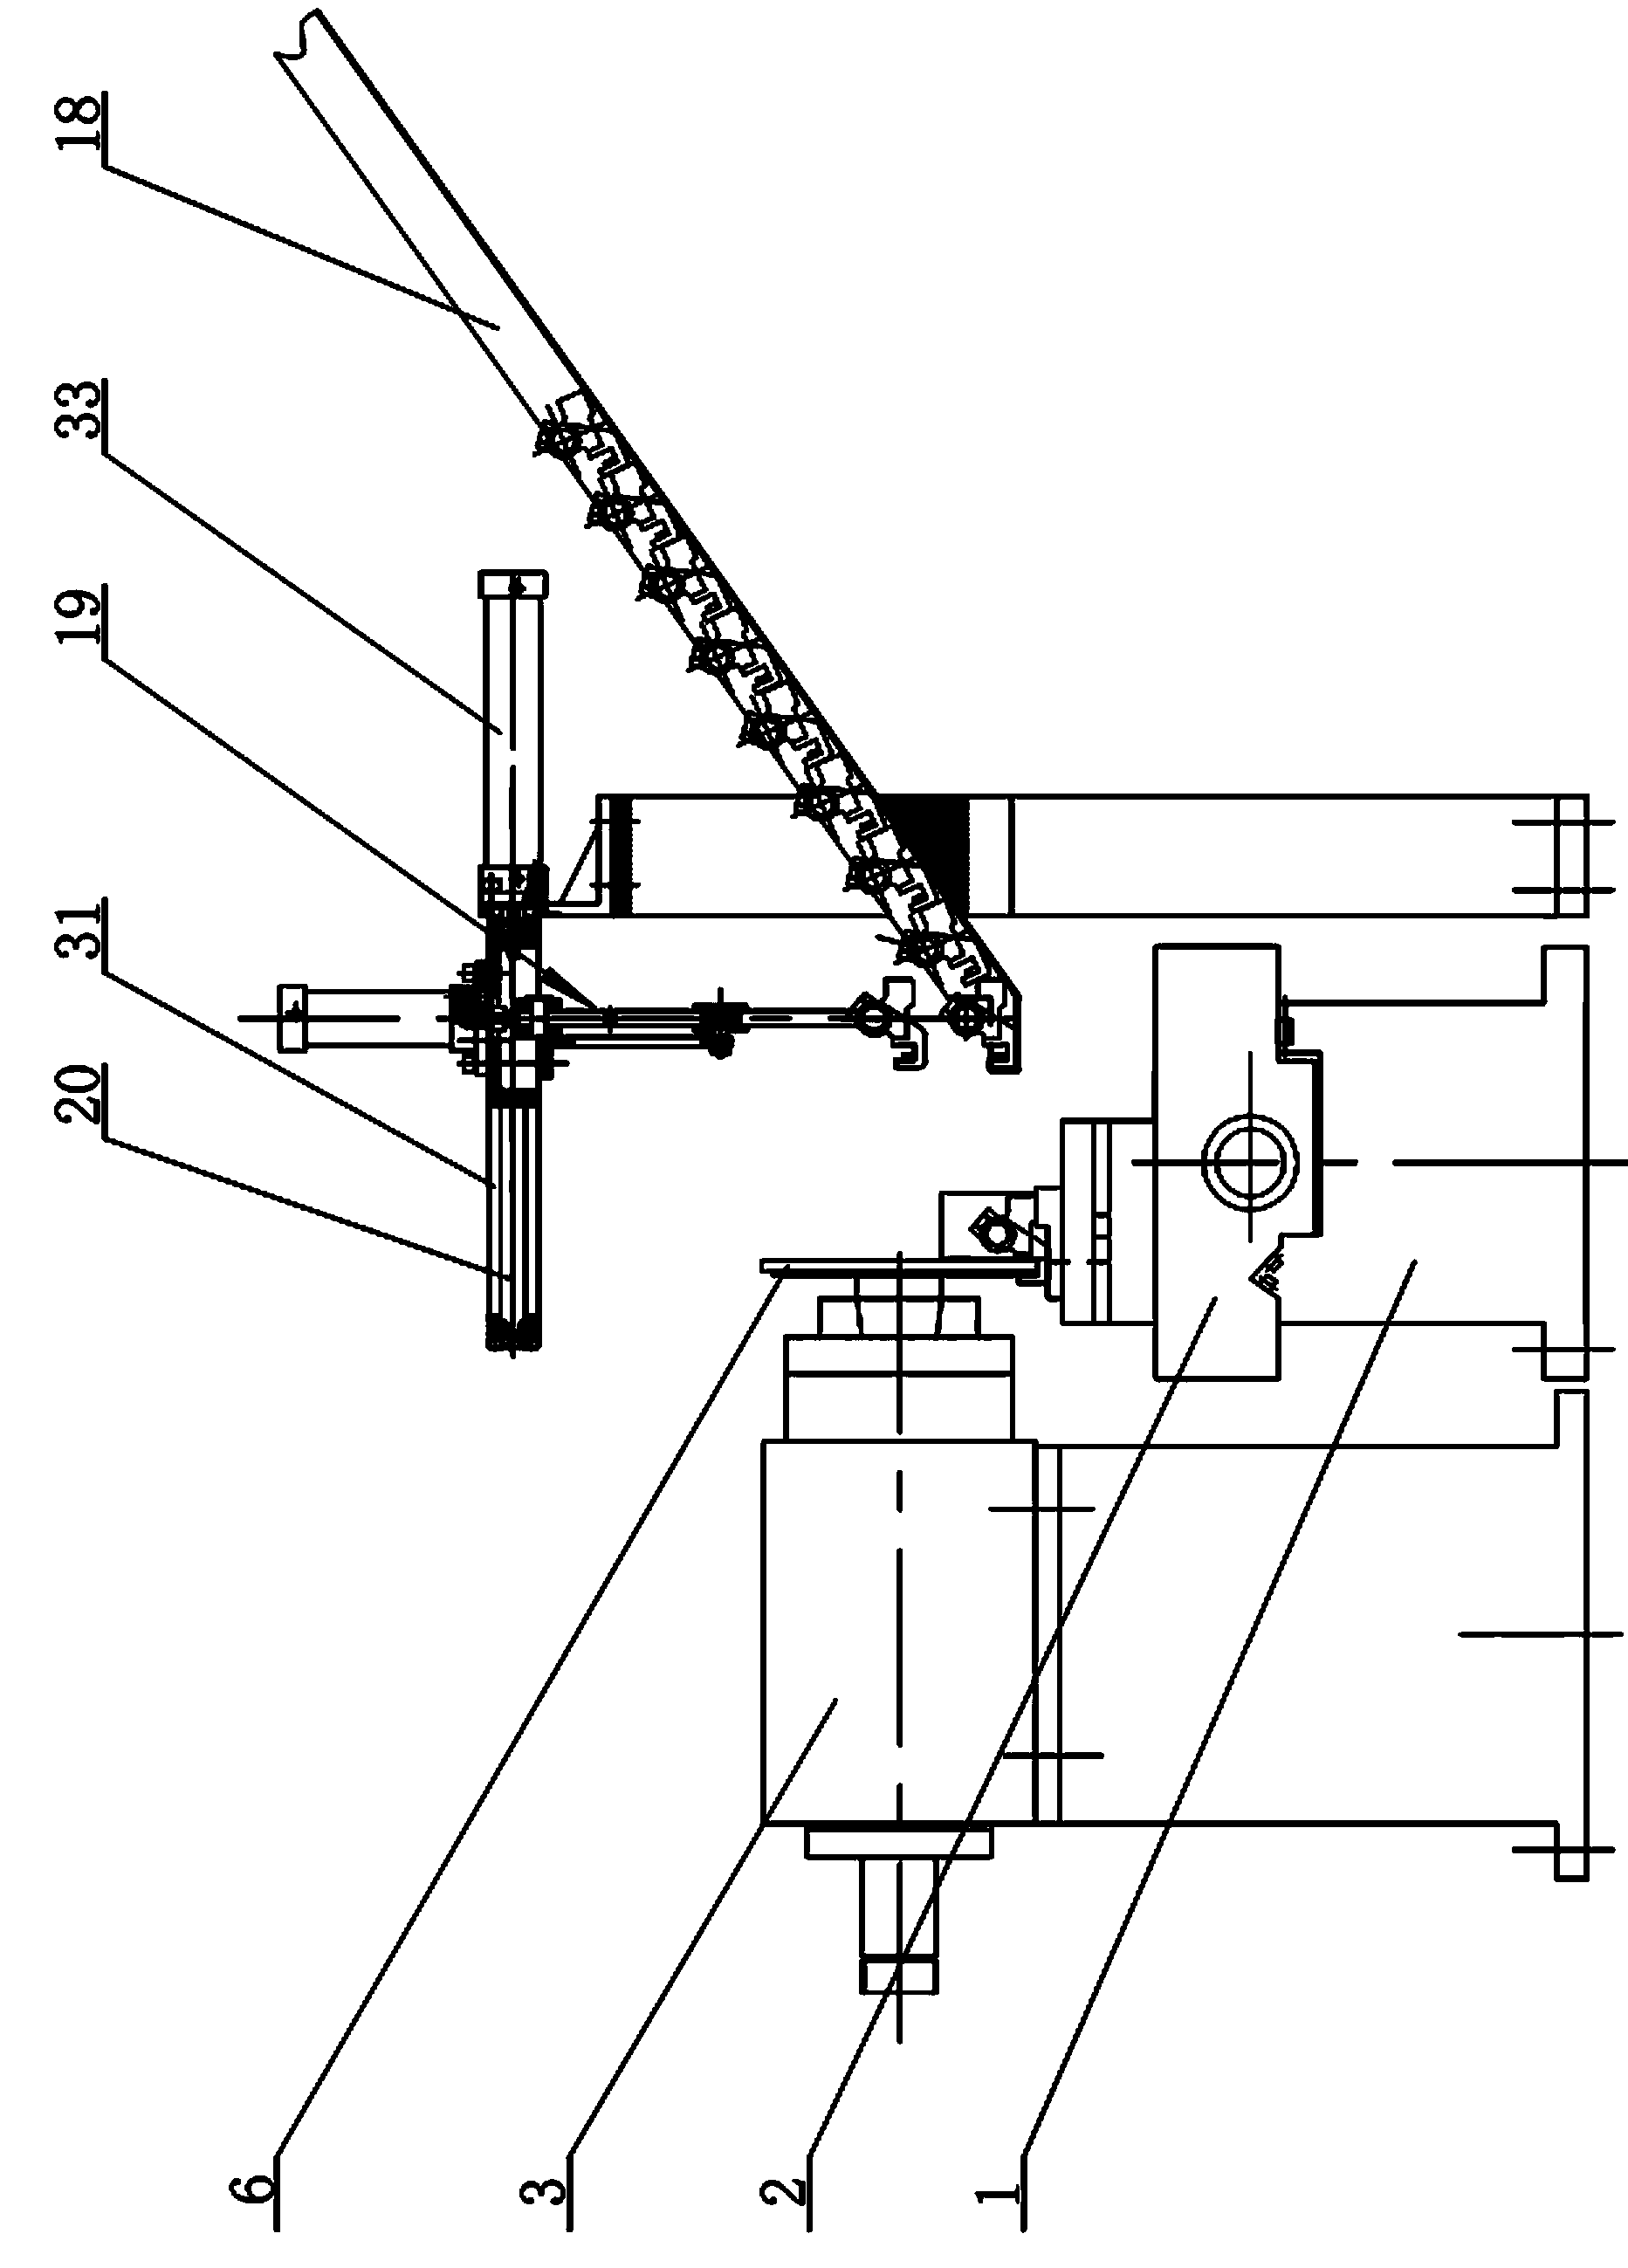 Automatic automobile shifting fork machining machine tool